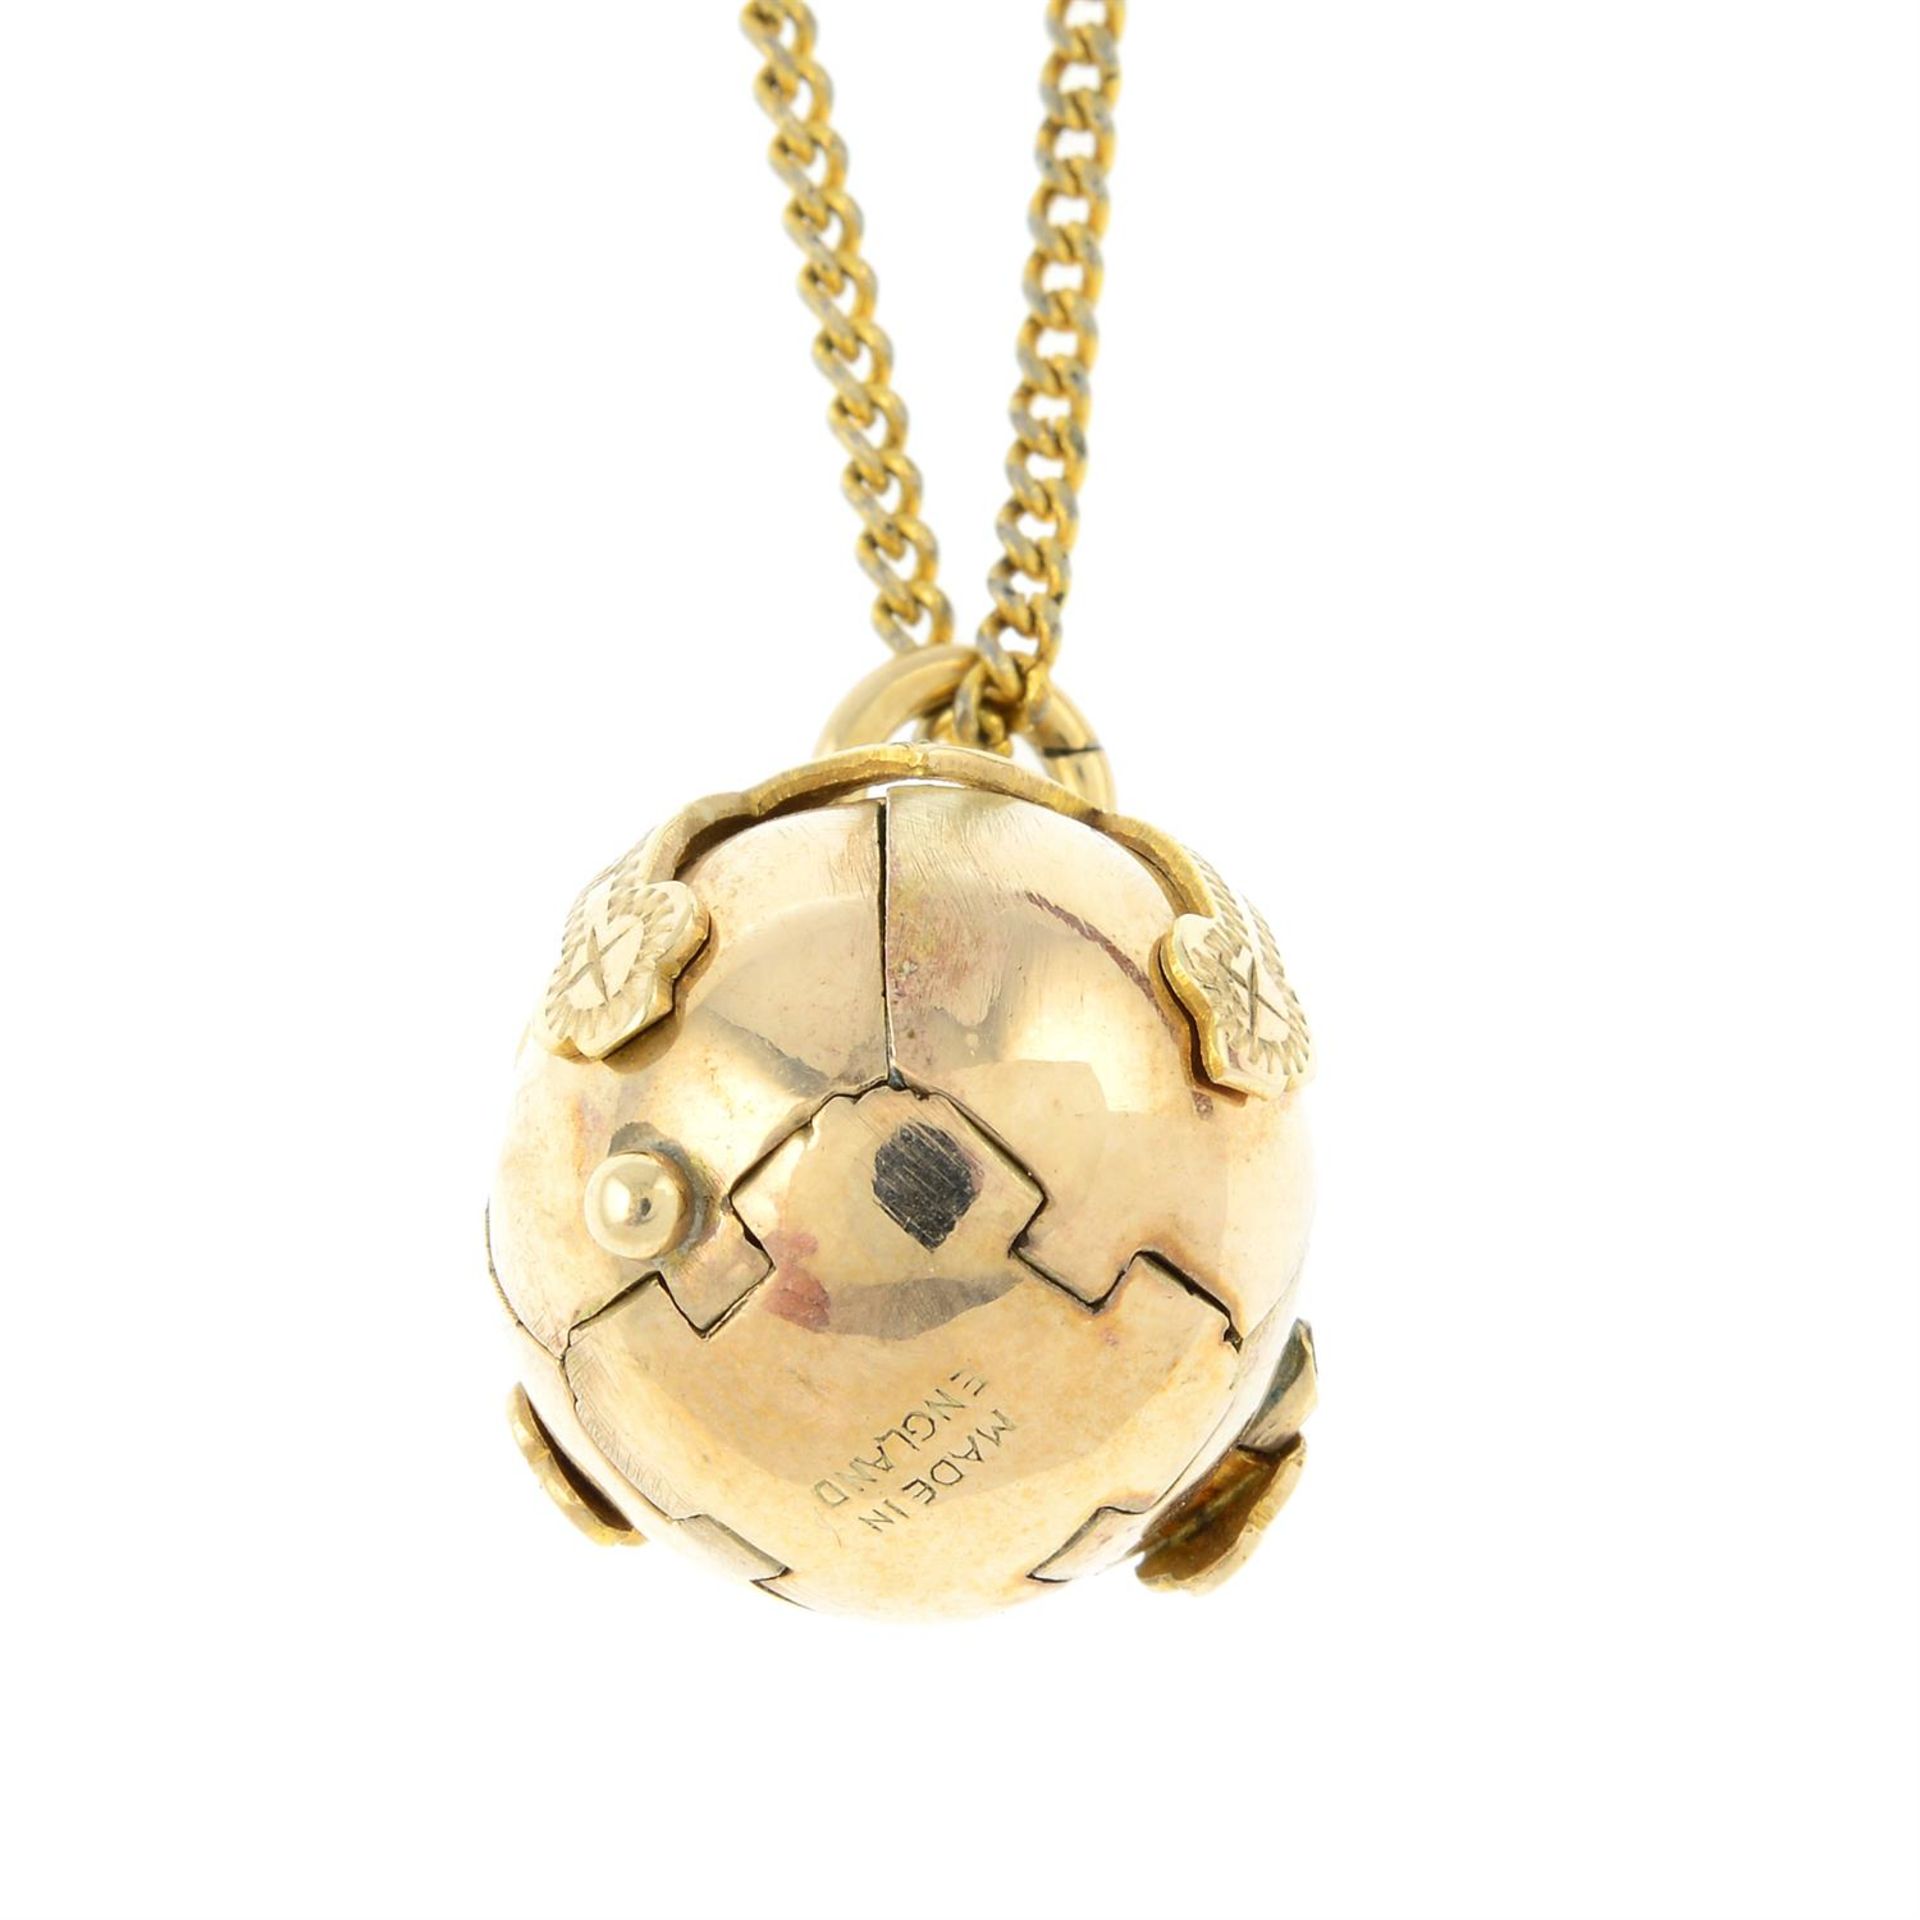 A Masonic ball pendant, with chain.